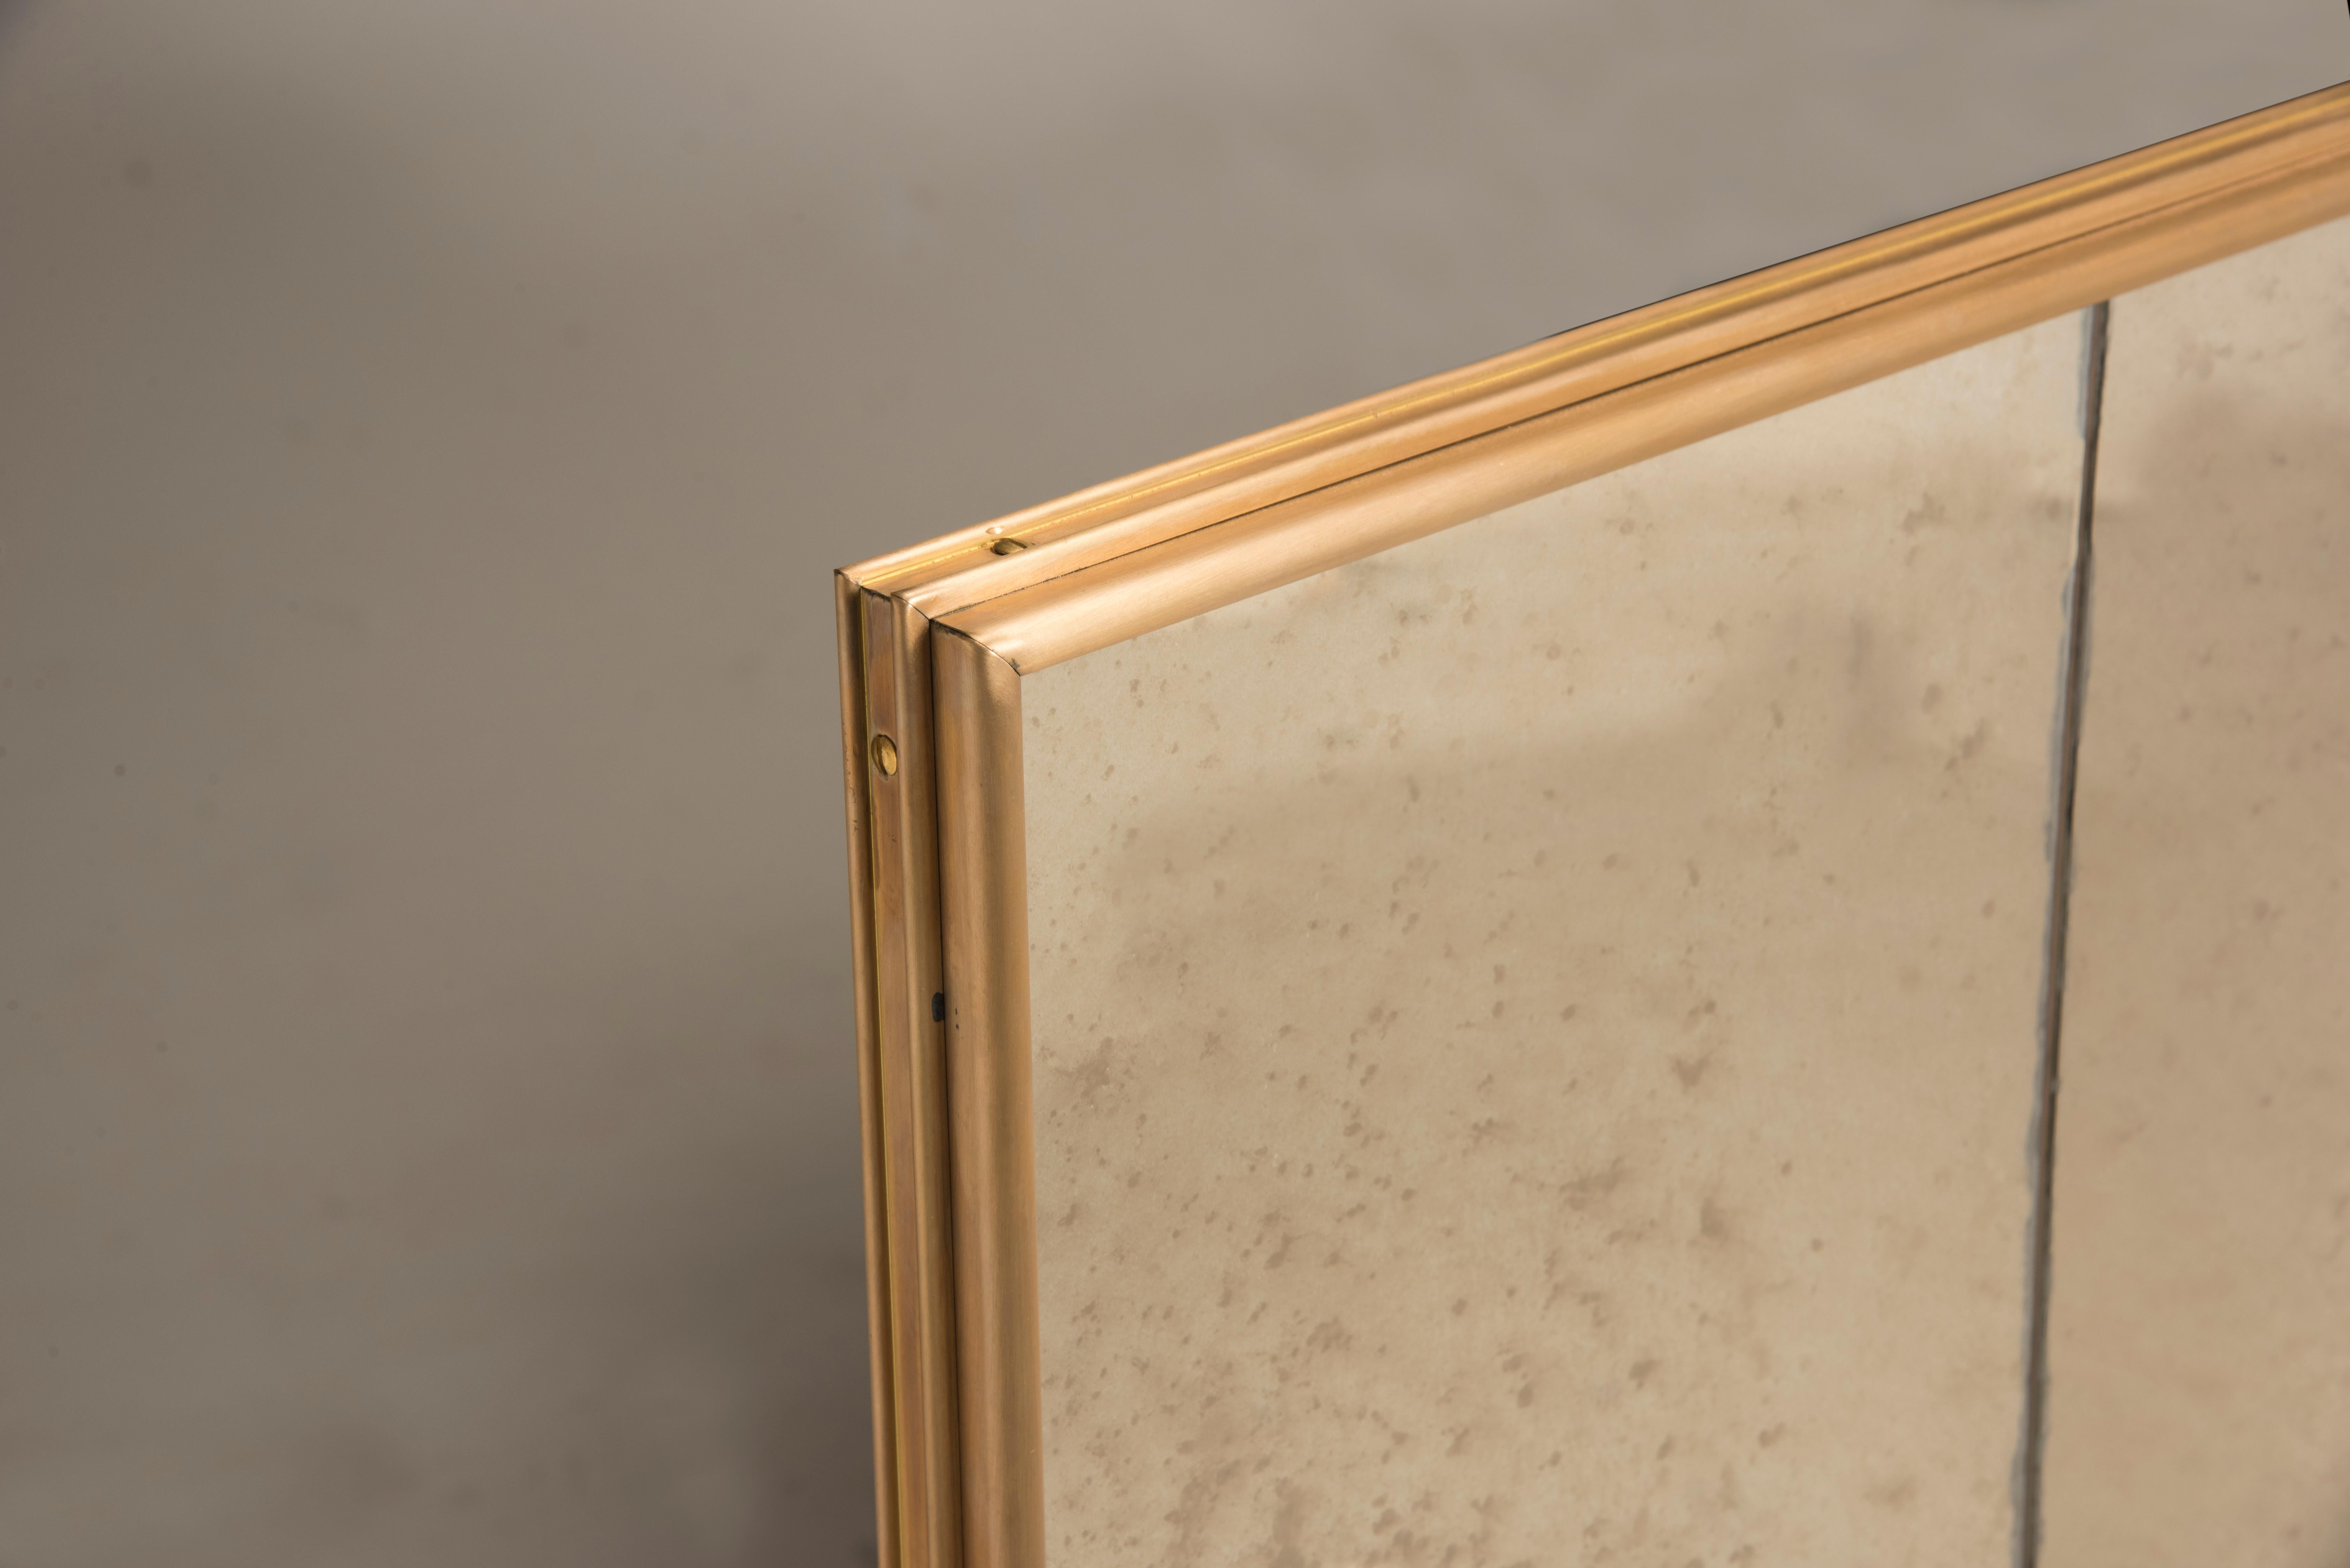 Italian 21st Century Rectangular Art Deco Style Paneled Brass Classic Mirror 100 x 200cm For Sale